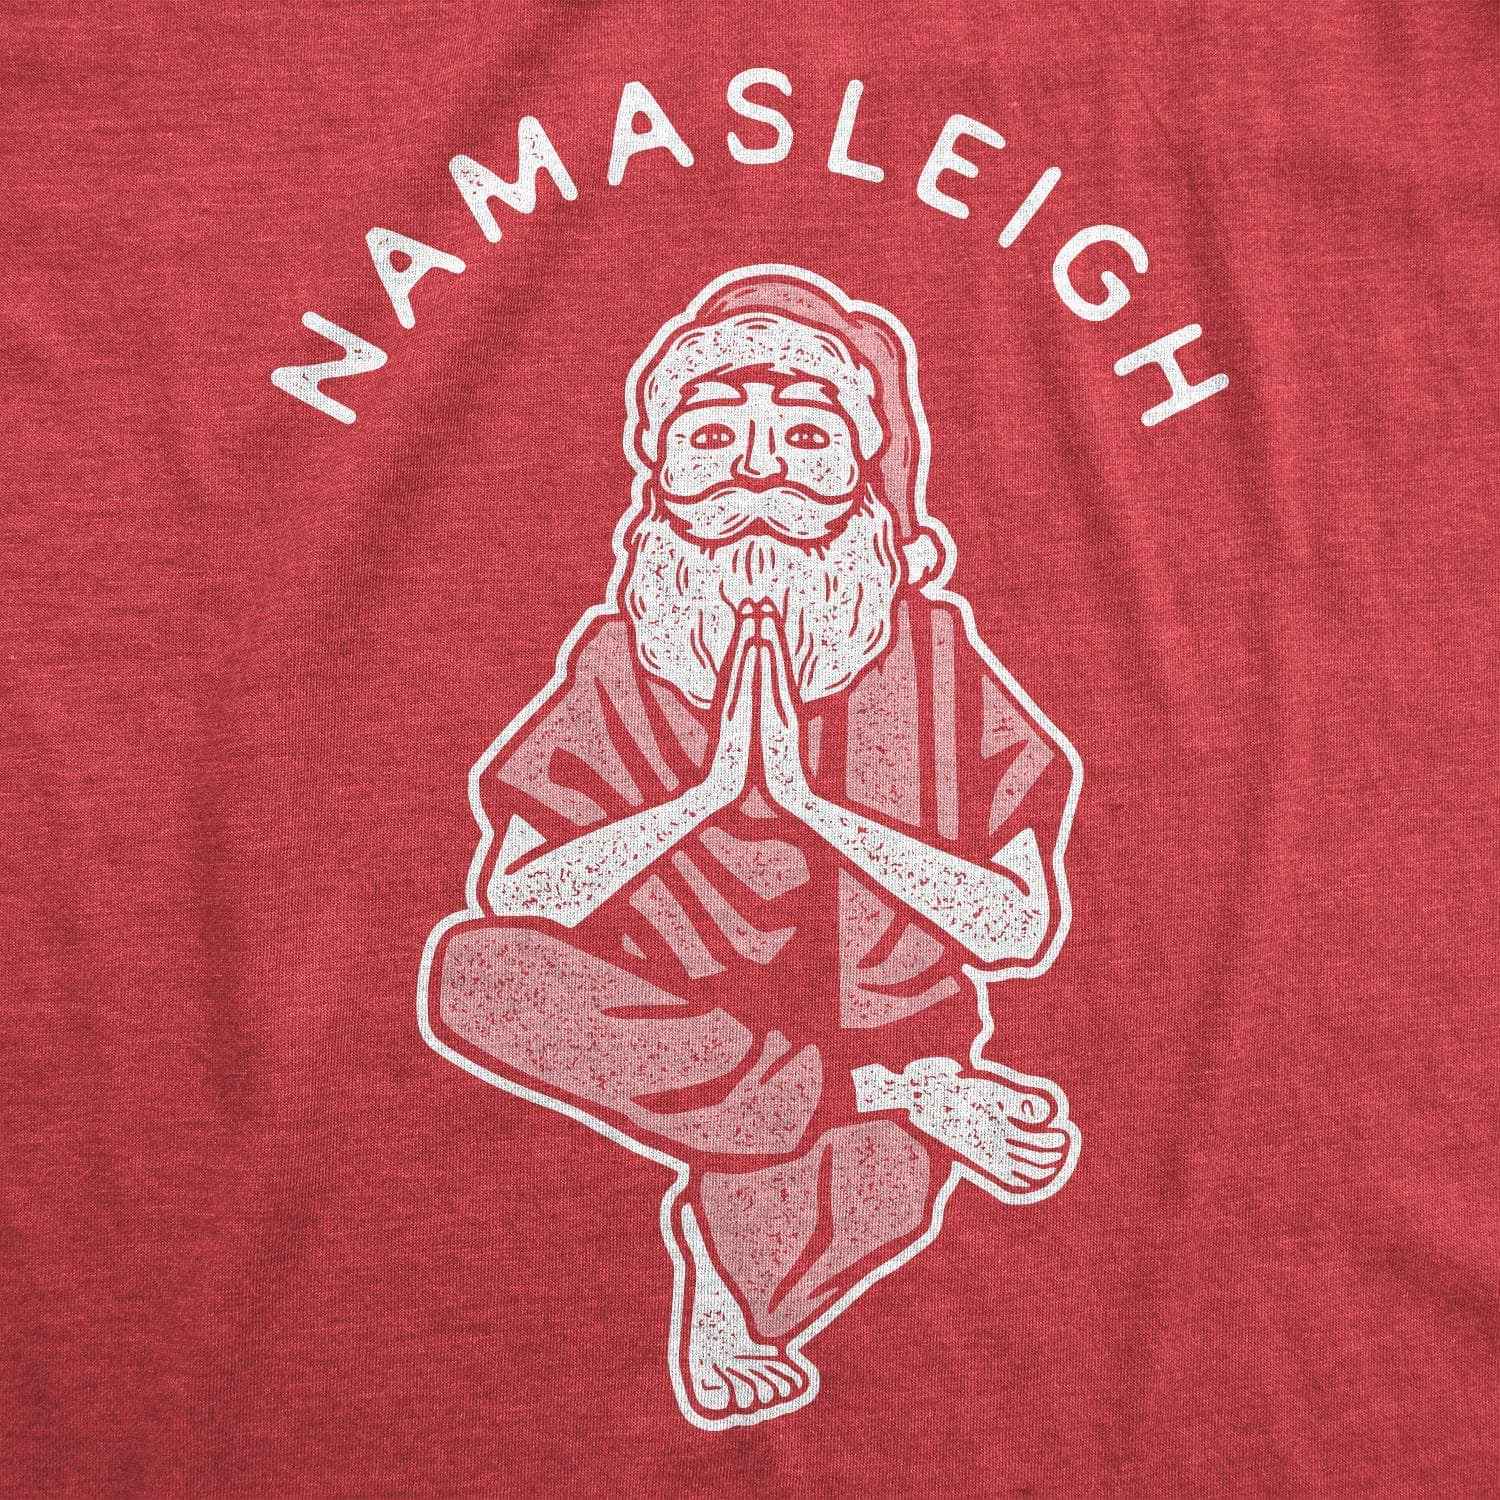 Namasleigh Women's Tshirt - Crazy Dog T-Shirts